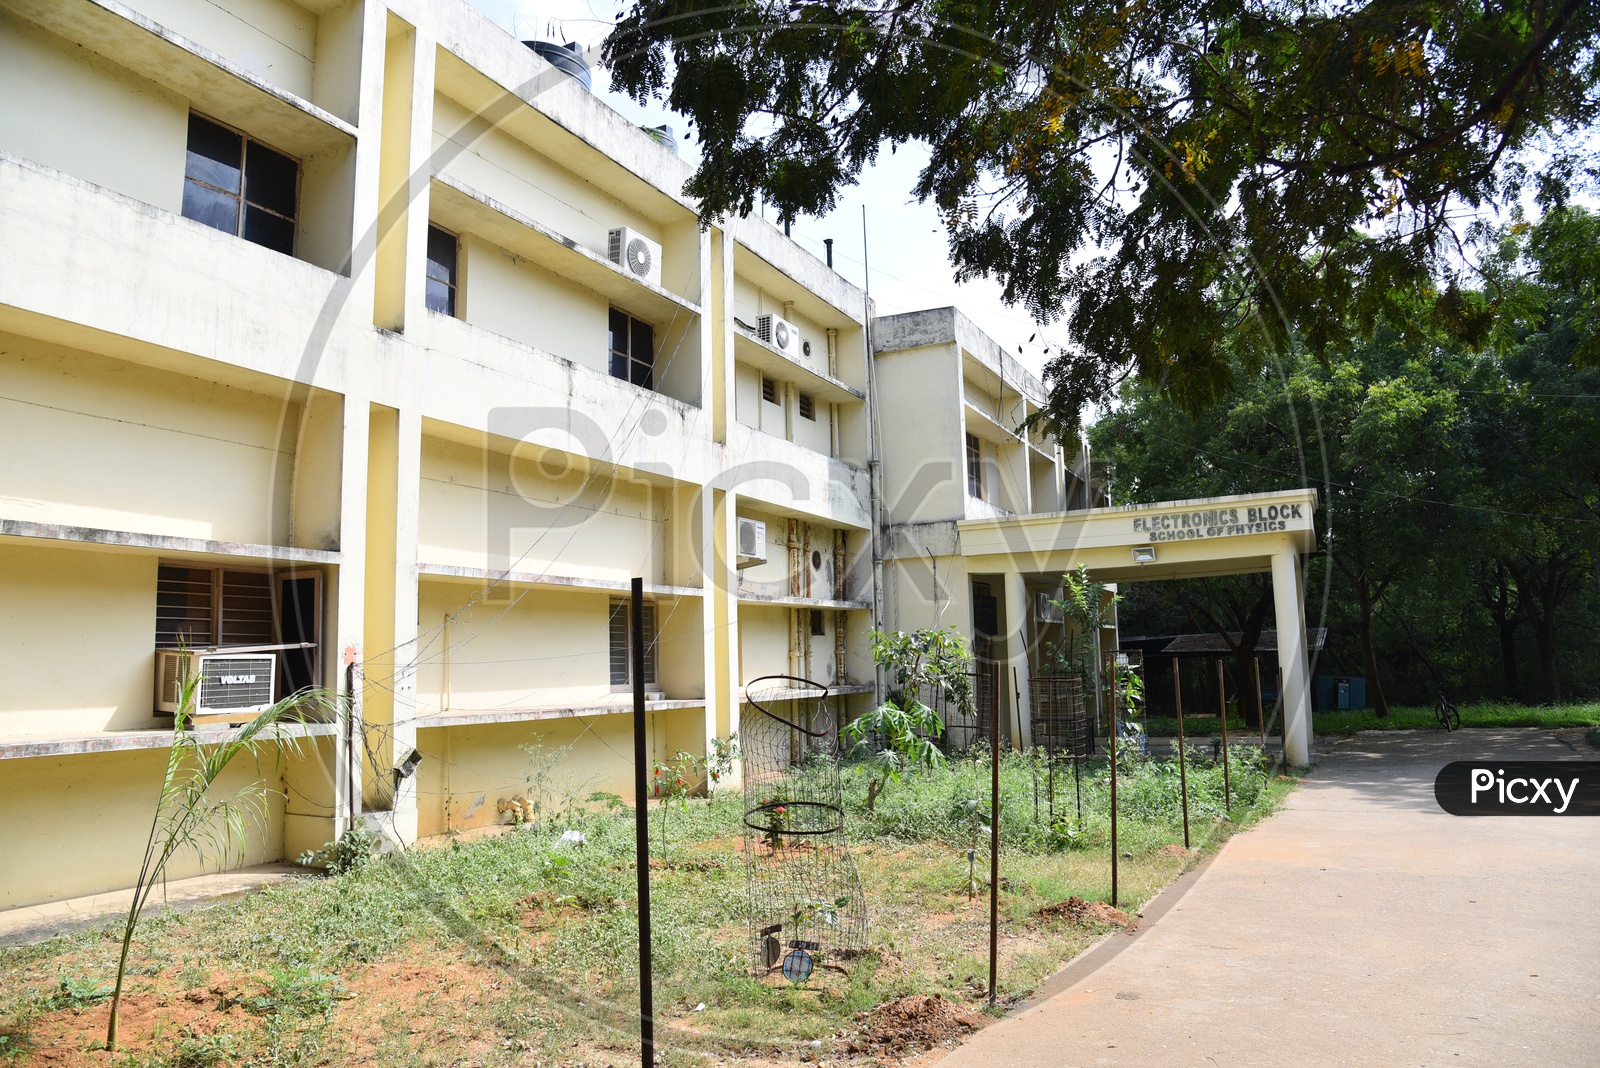 Electronics Block, School of Physics, University of Hyderabad